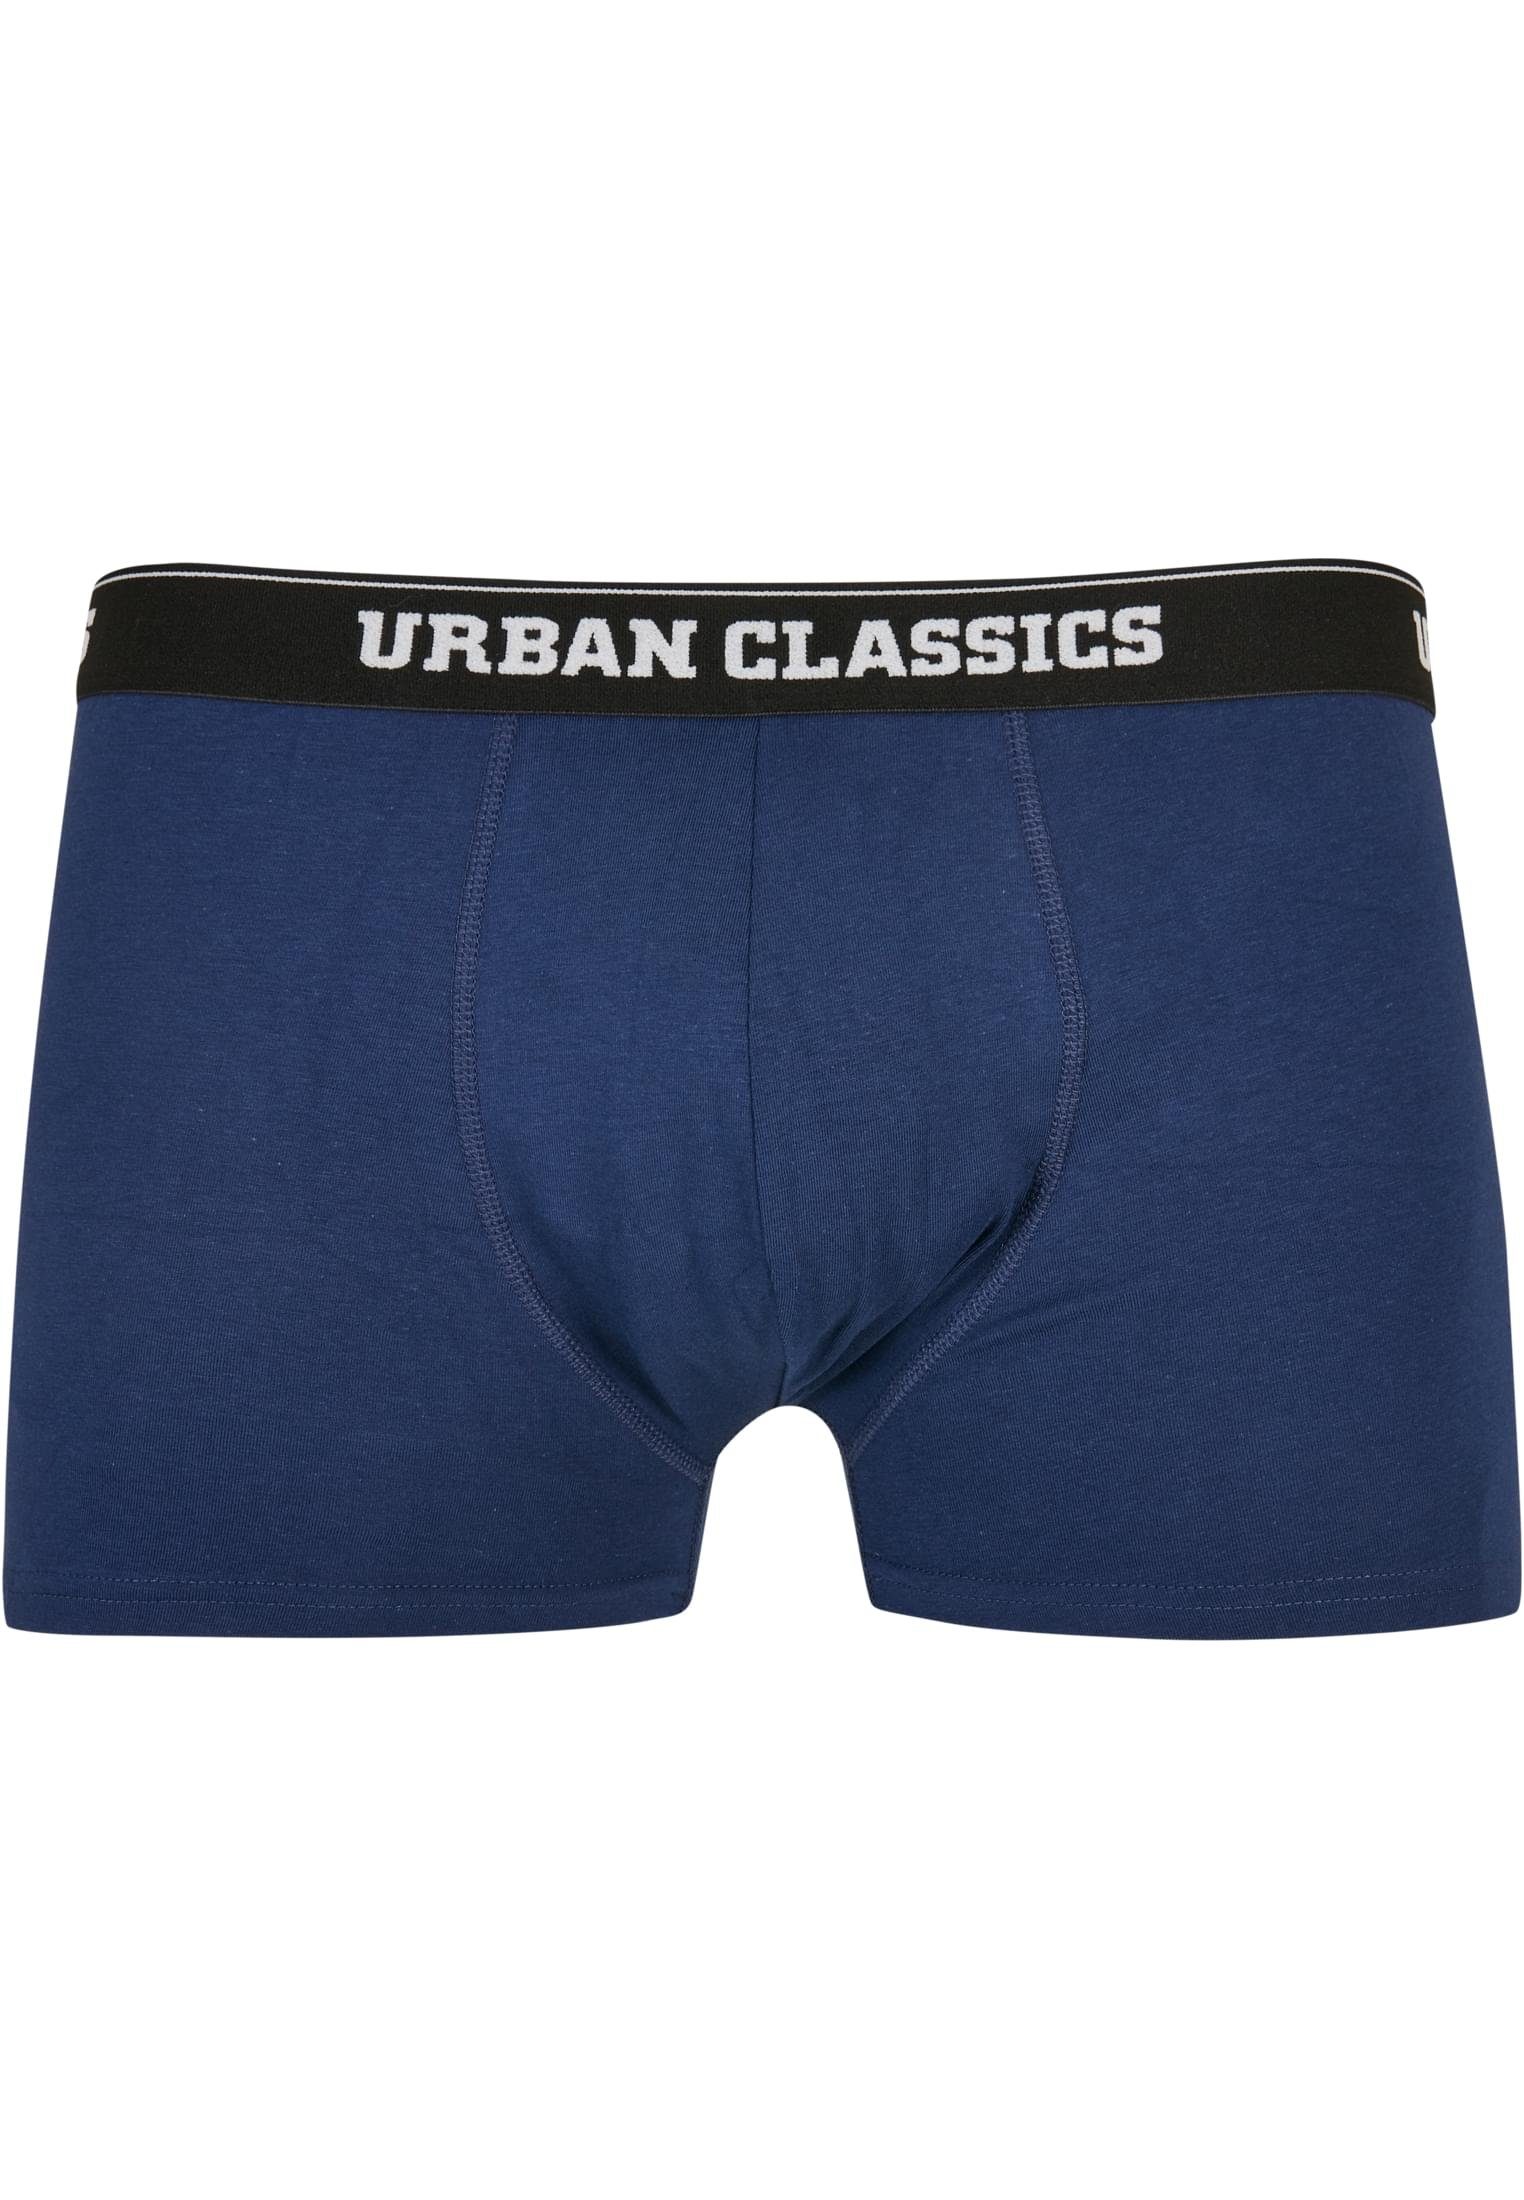 URBAN CLASSICS Boxer Shorts Herren black darkblue 3-Pack Boxershorts navy Organic (1-St)